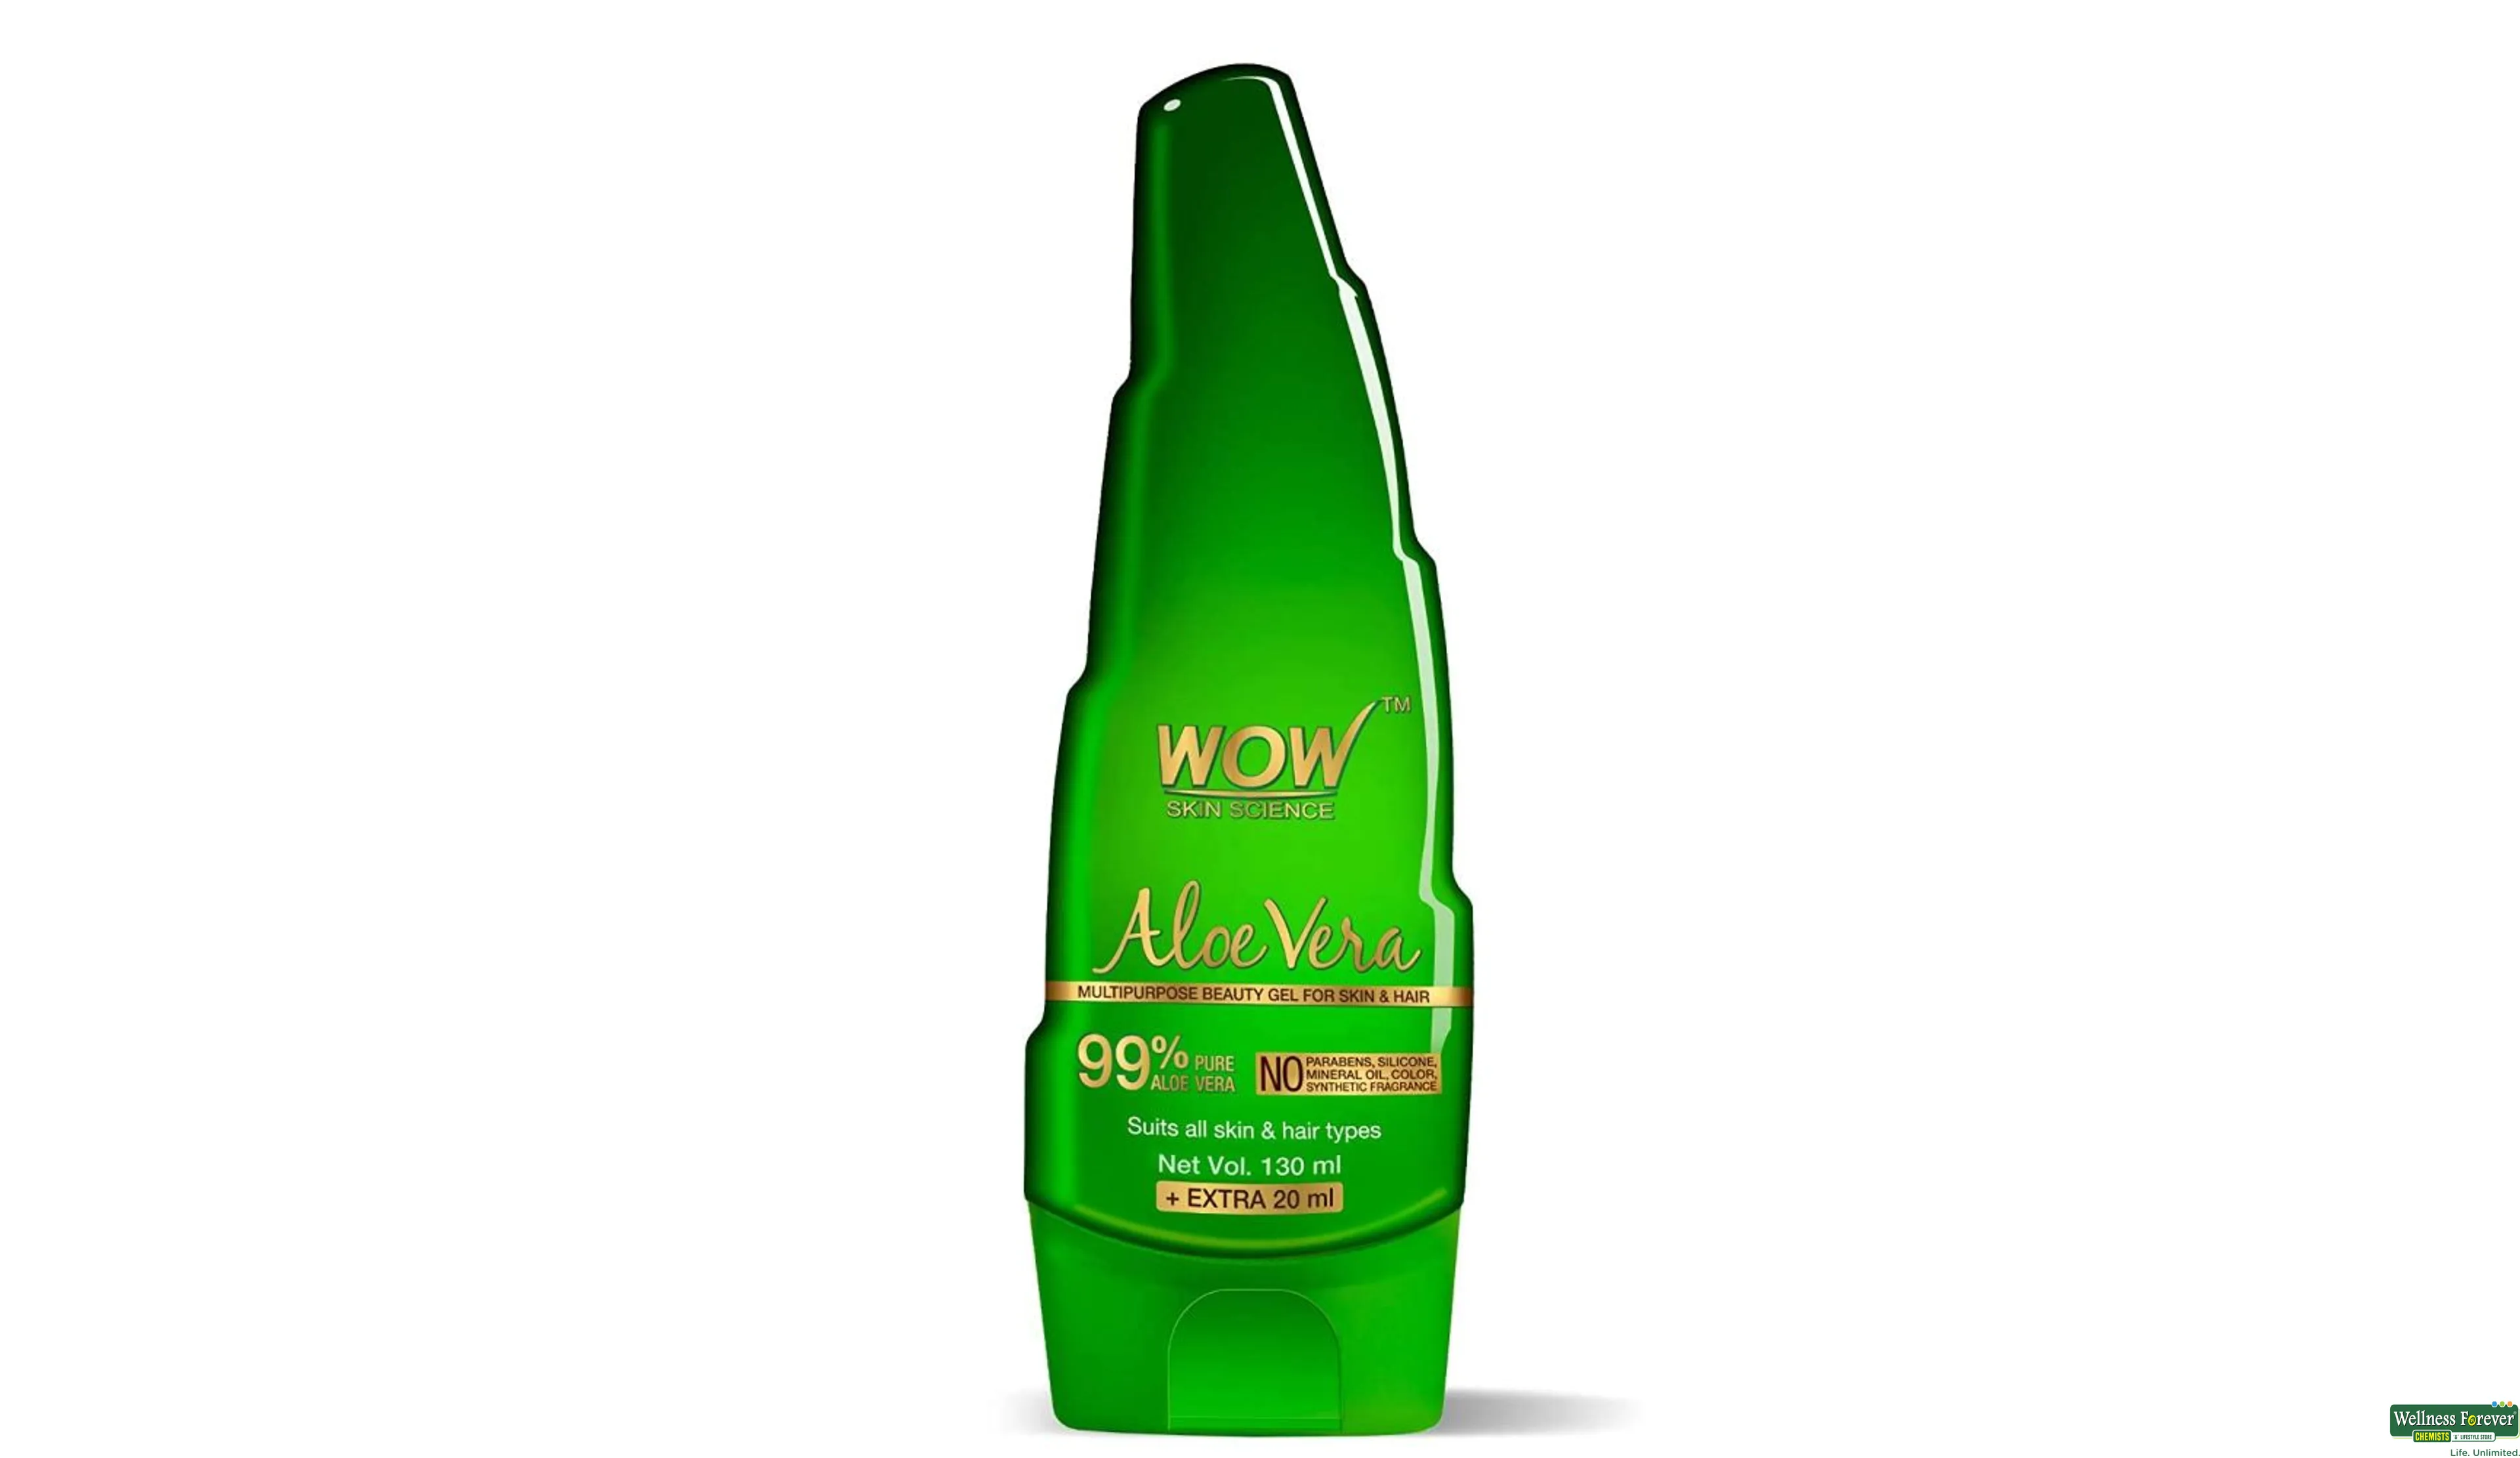 Green Fig Aftershave Splash, 100% Organic Witch Hazel, Aloe Vera,  Hyaluronic Acid, 100 Ml 